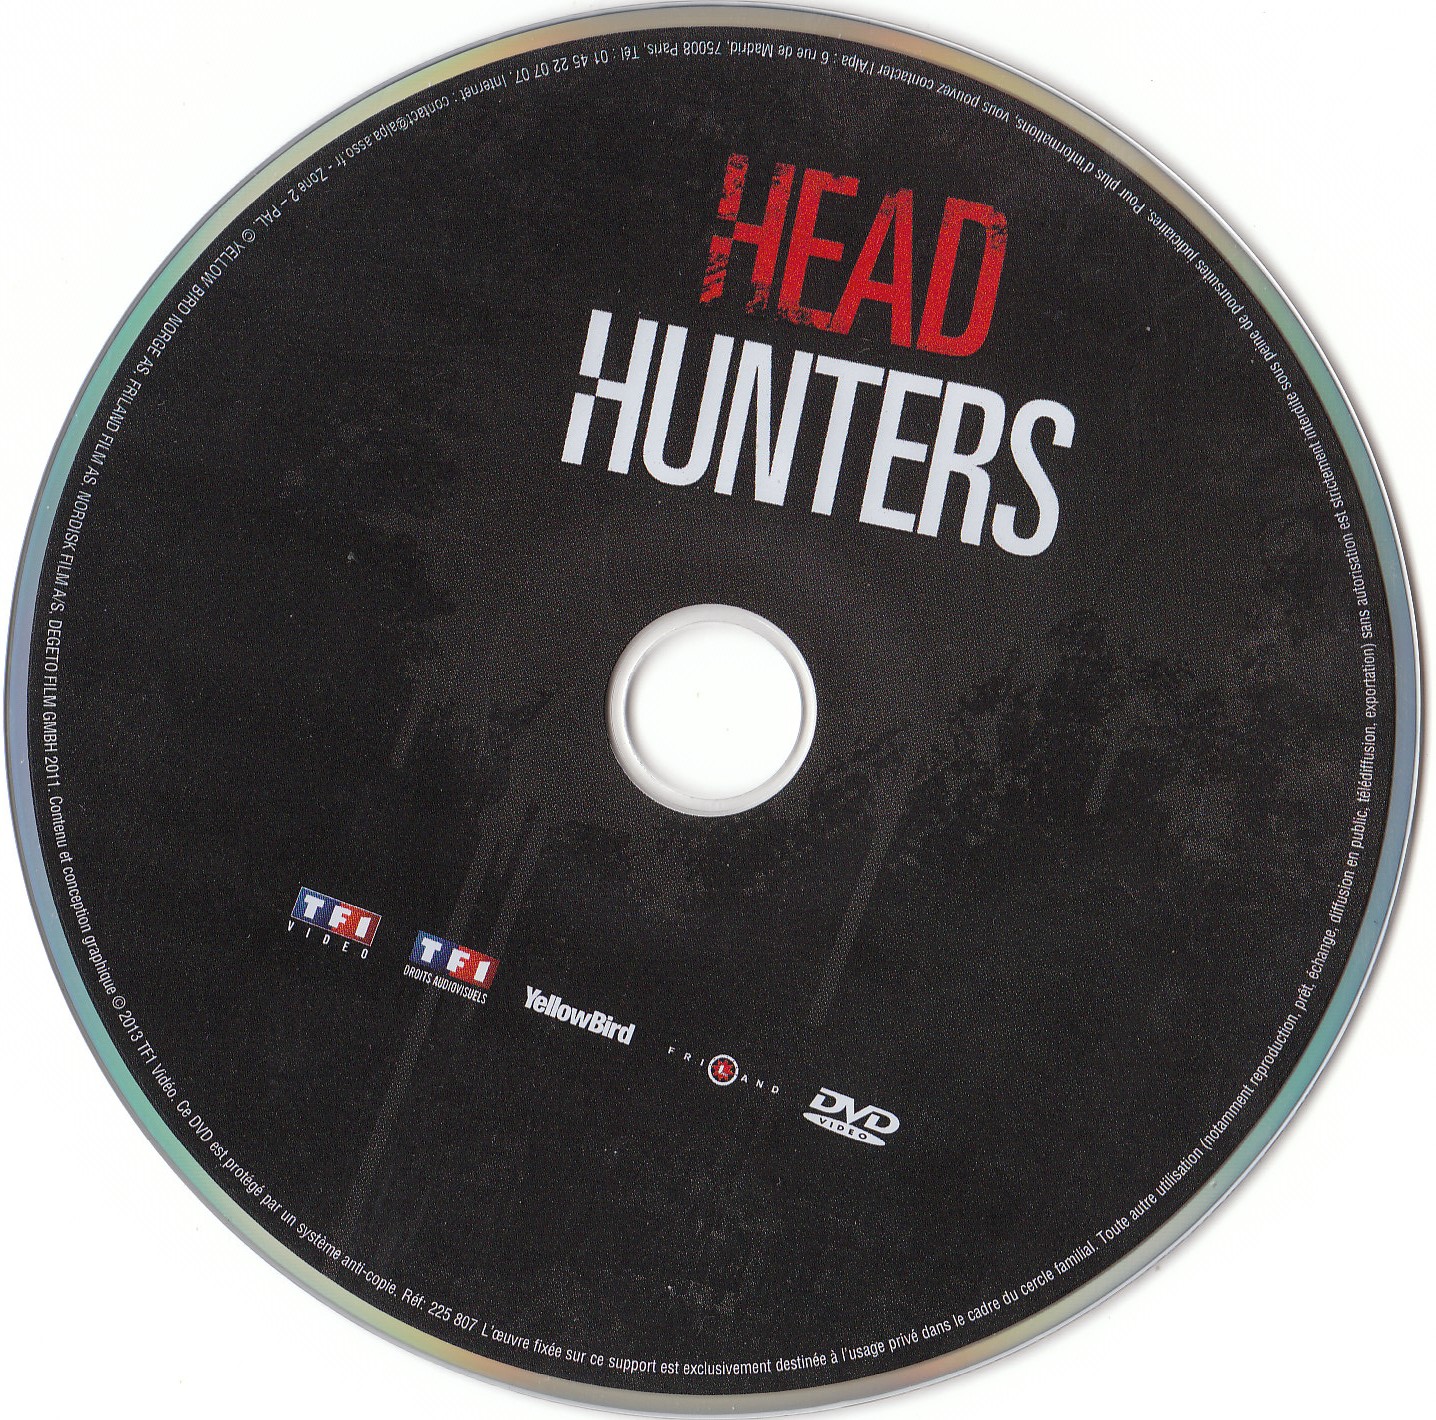 Head hunters